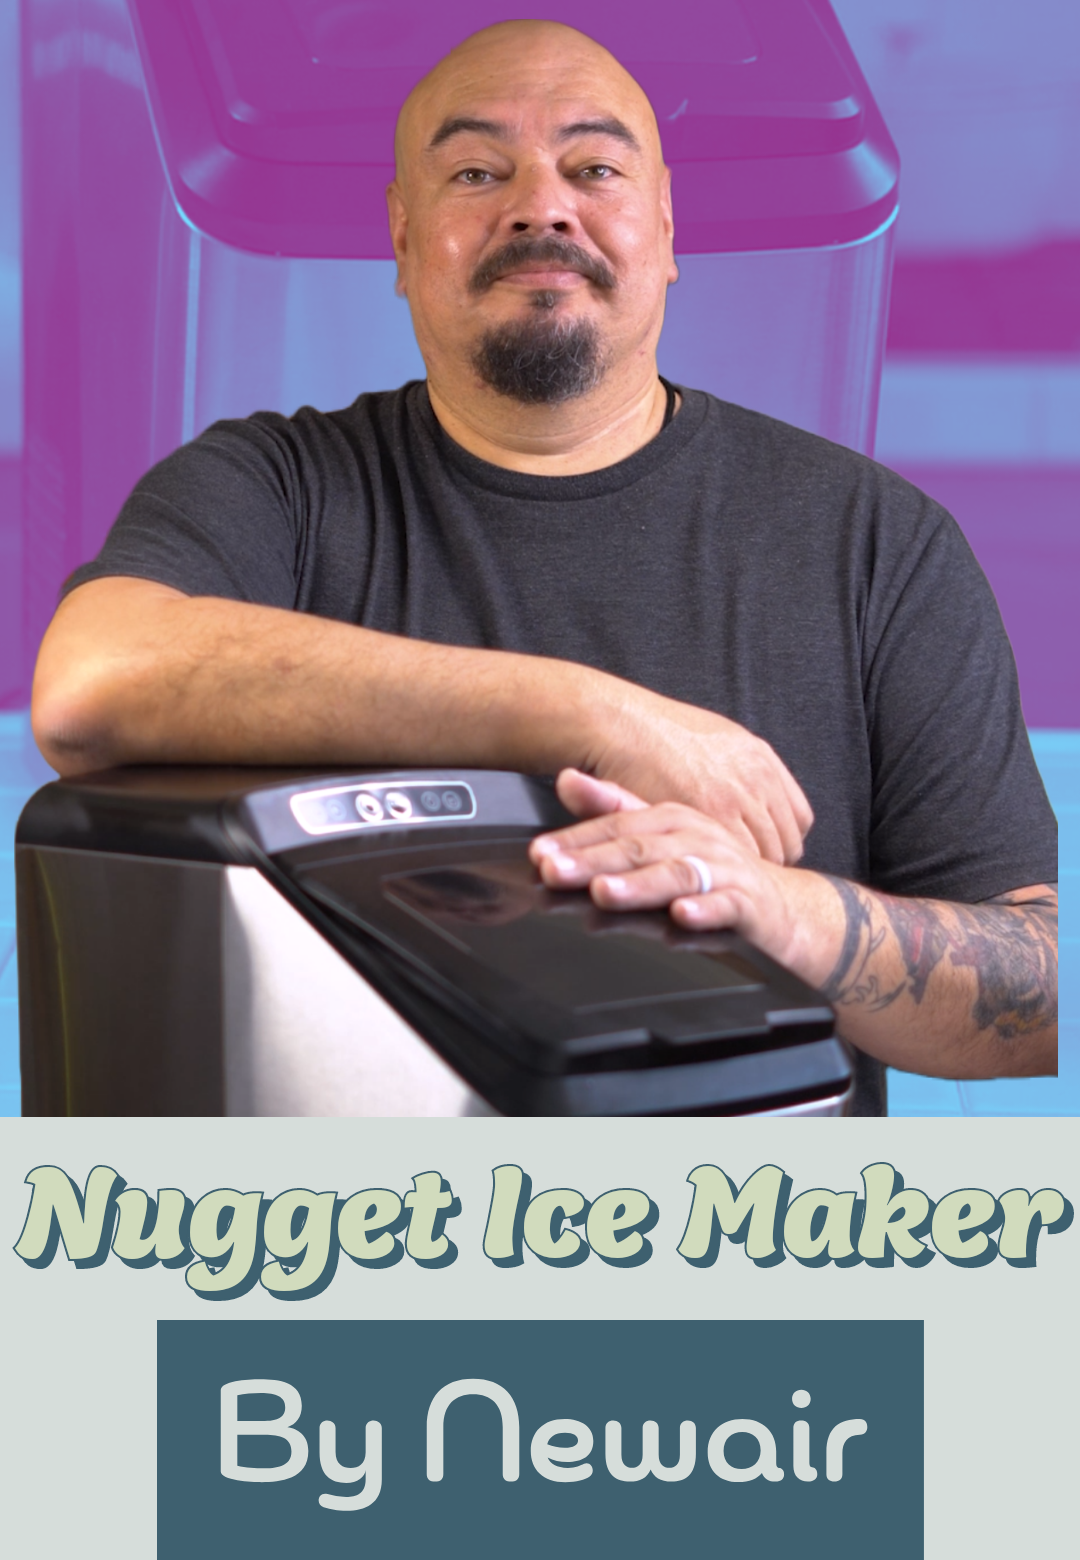 Newair Nugget Ice Maker